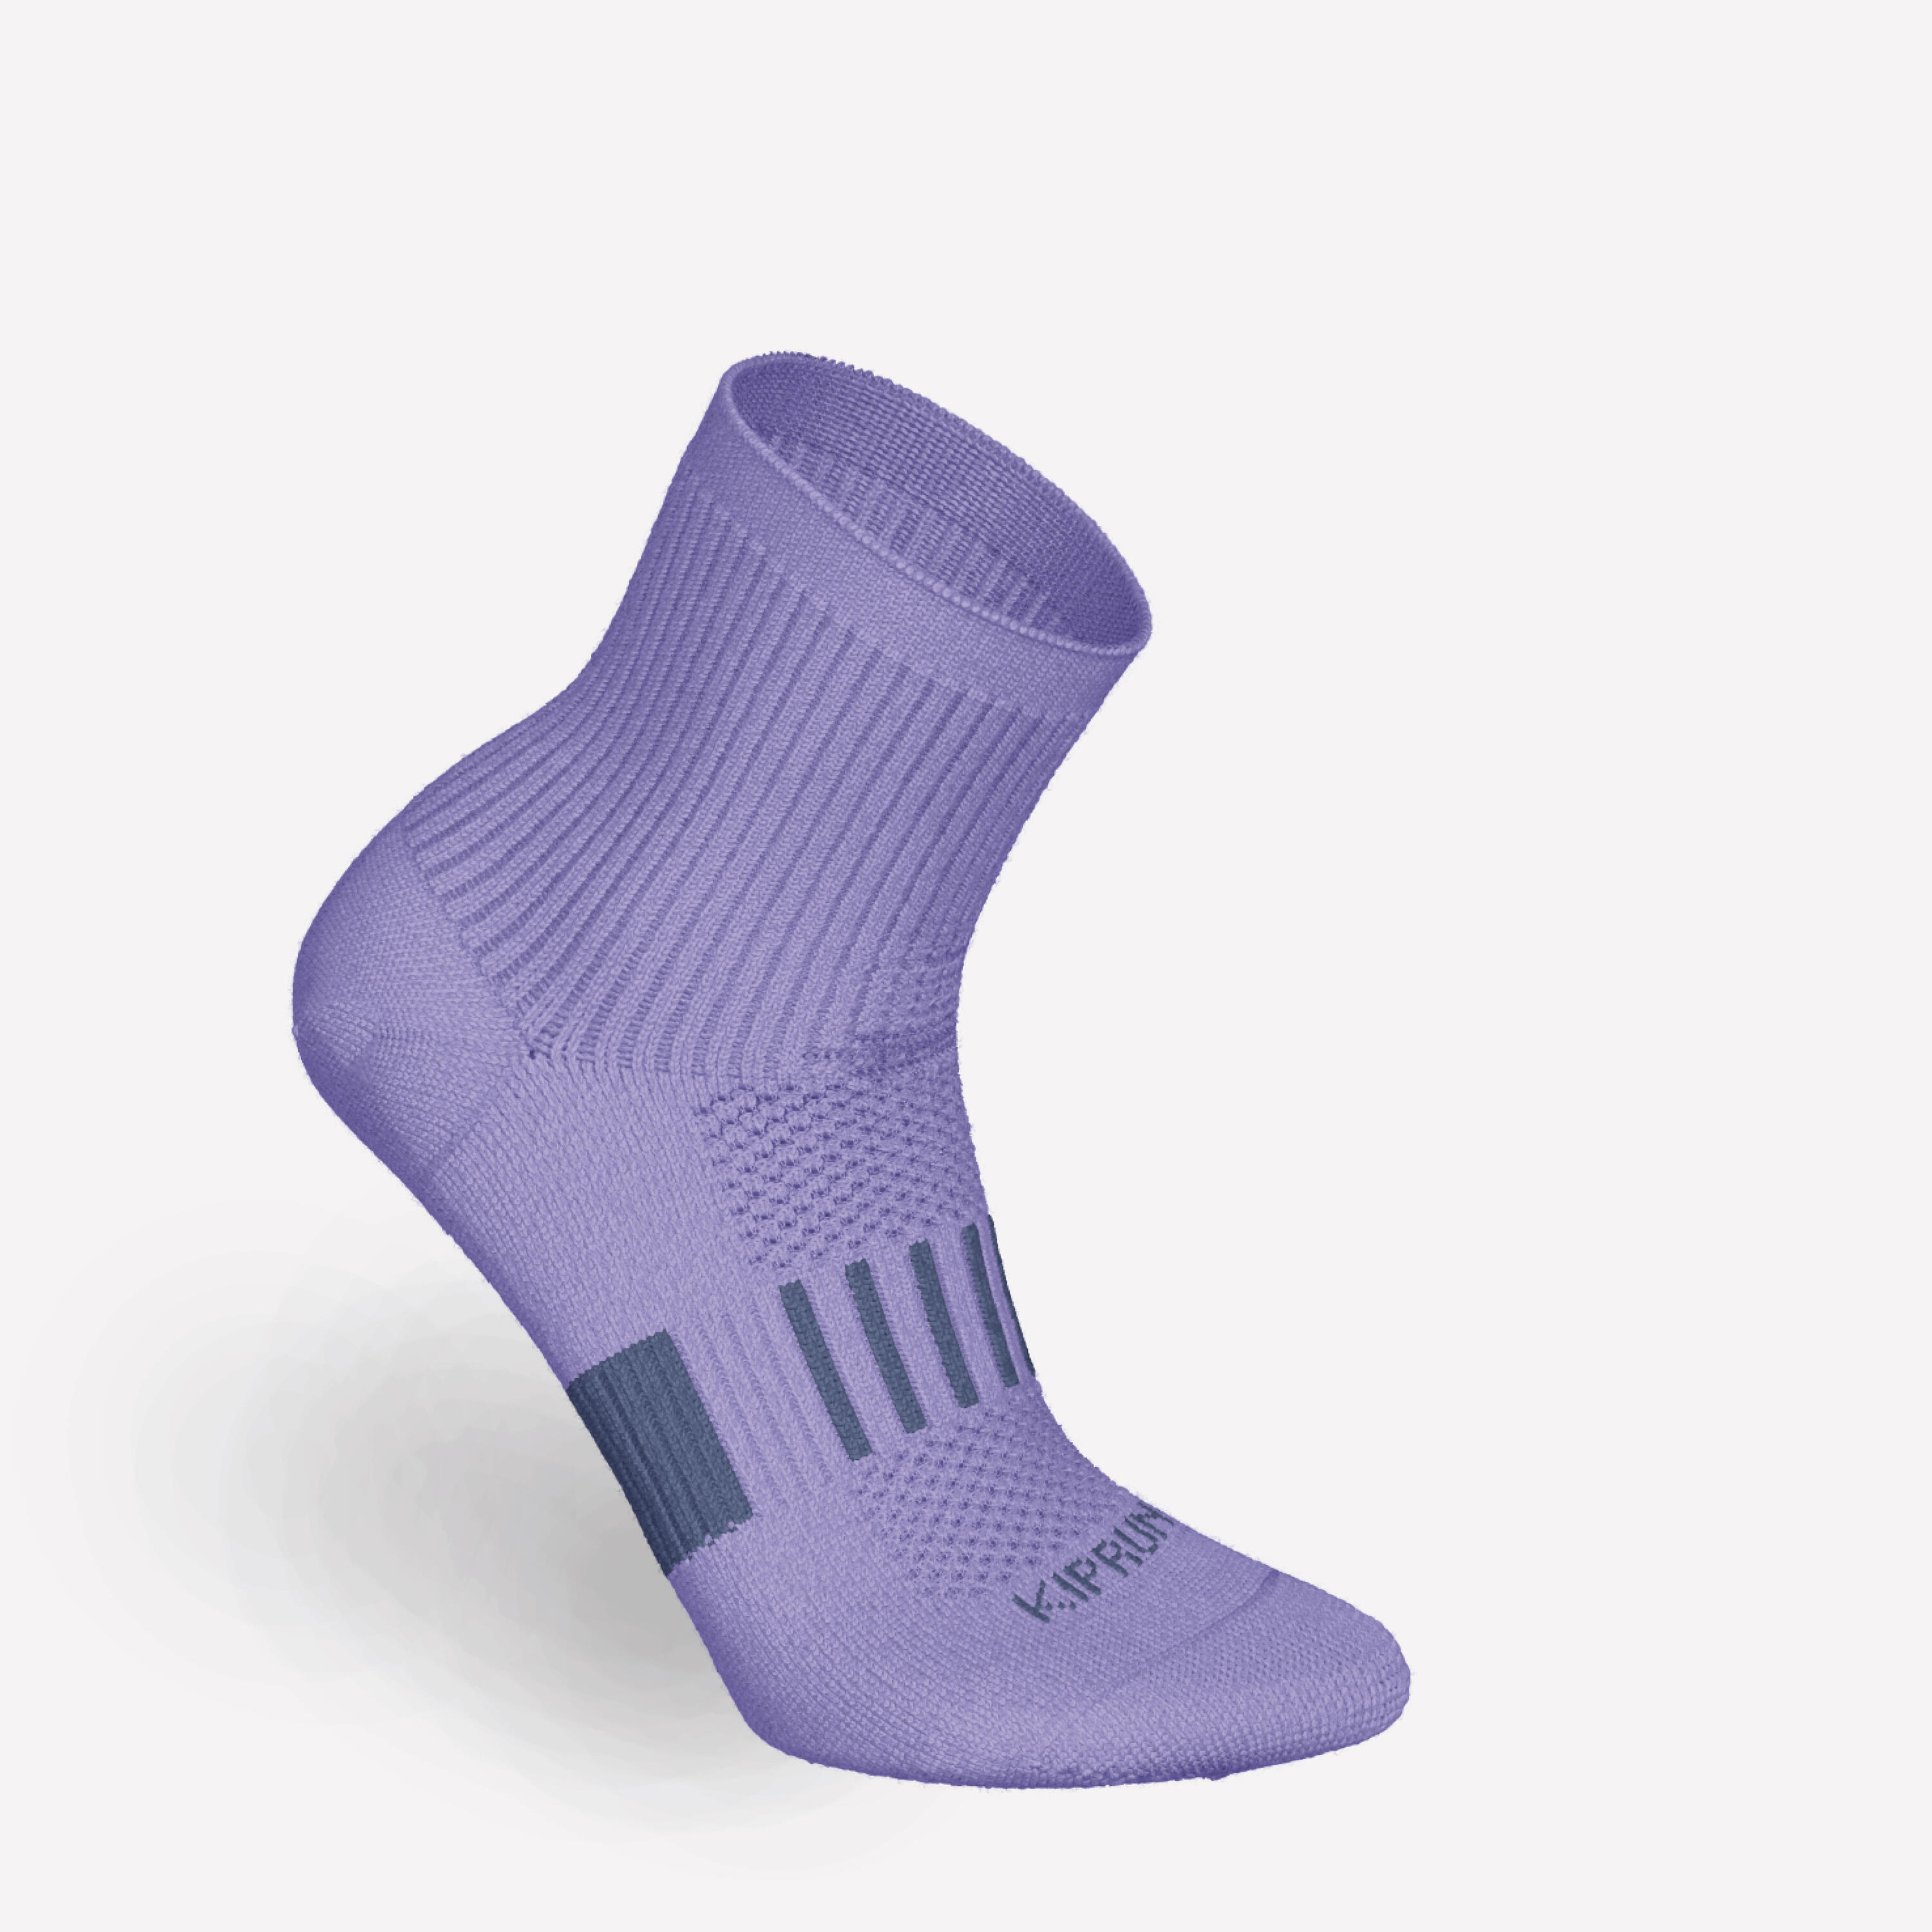 KIPRUN 500 mid kids' comfort running socks 2-pack - striped and plain purple 4/11